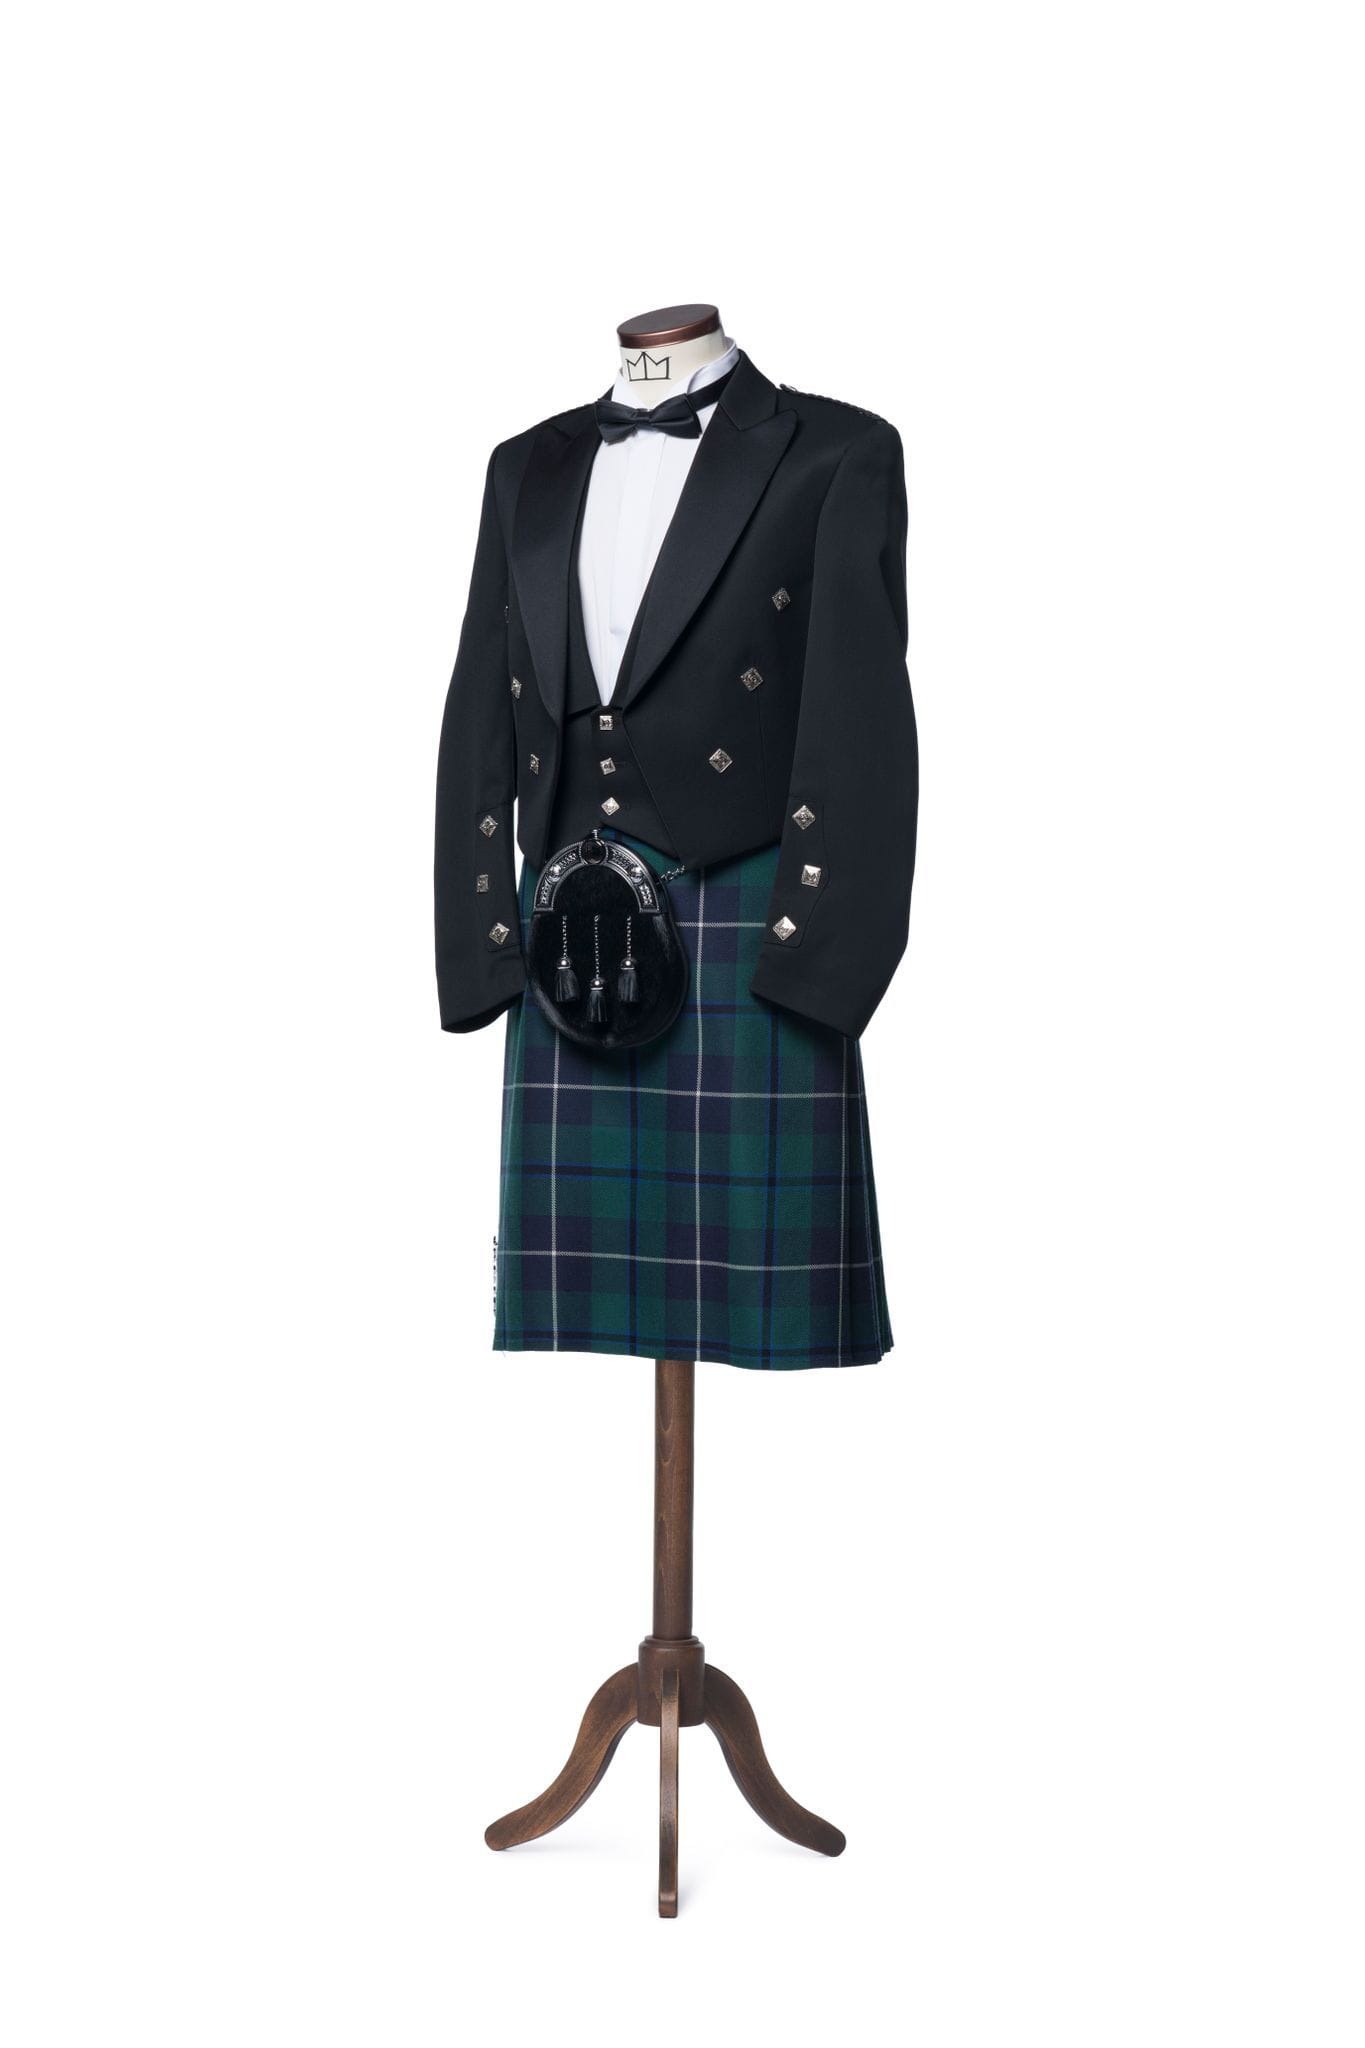 Prince Charlie Kilt Outfit - MacGregor and MacDuff